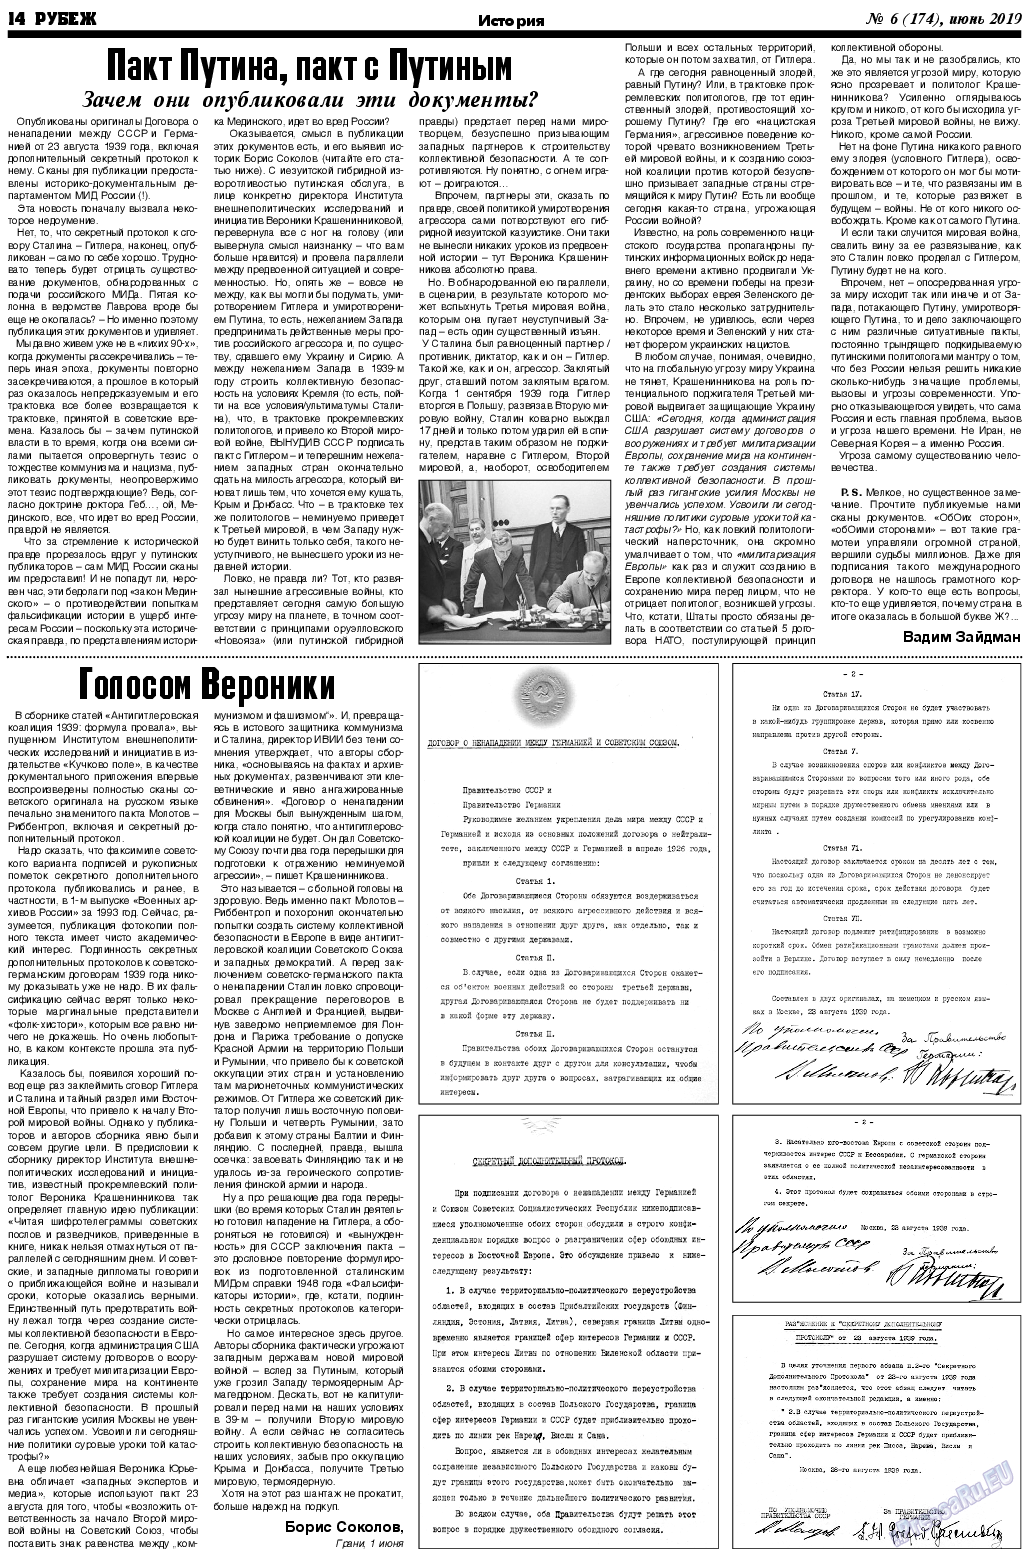 Рубеж, газета. 2019 №6 стр.14